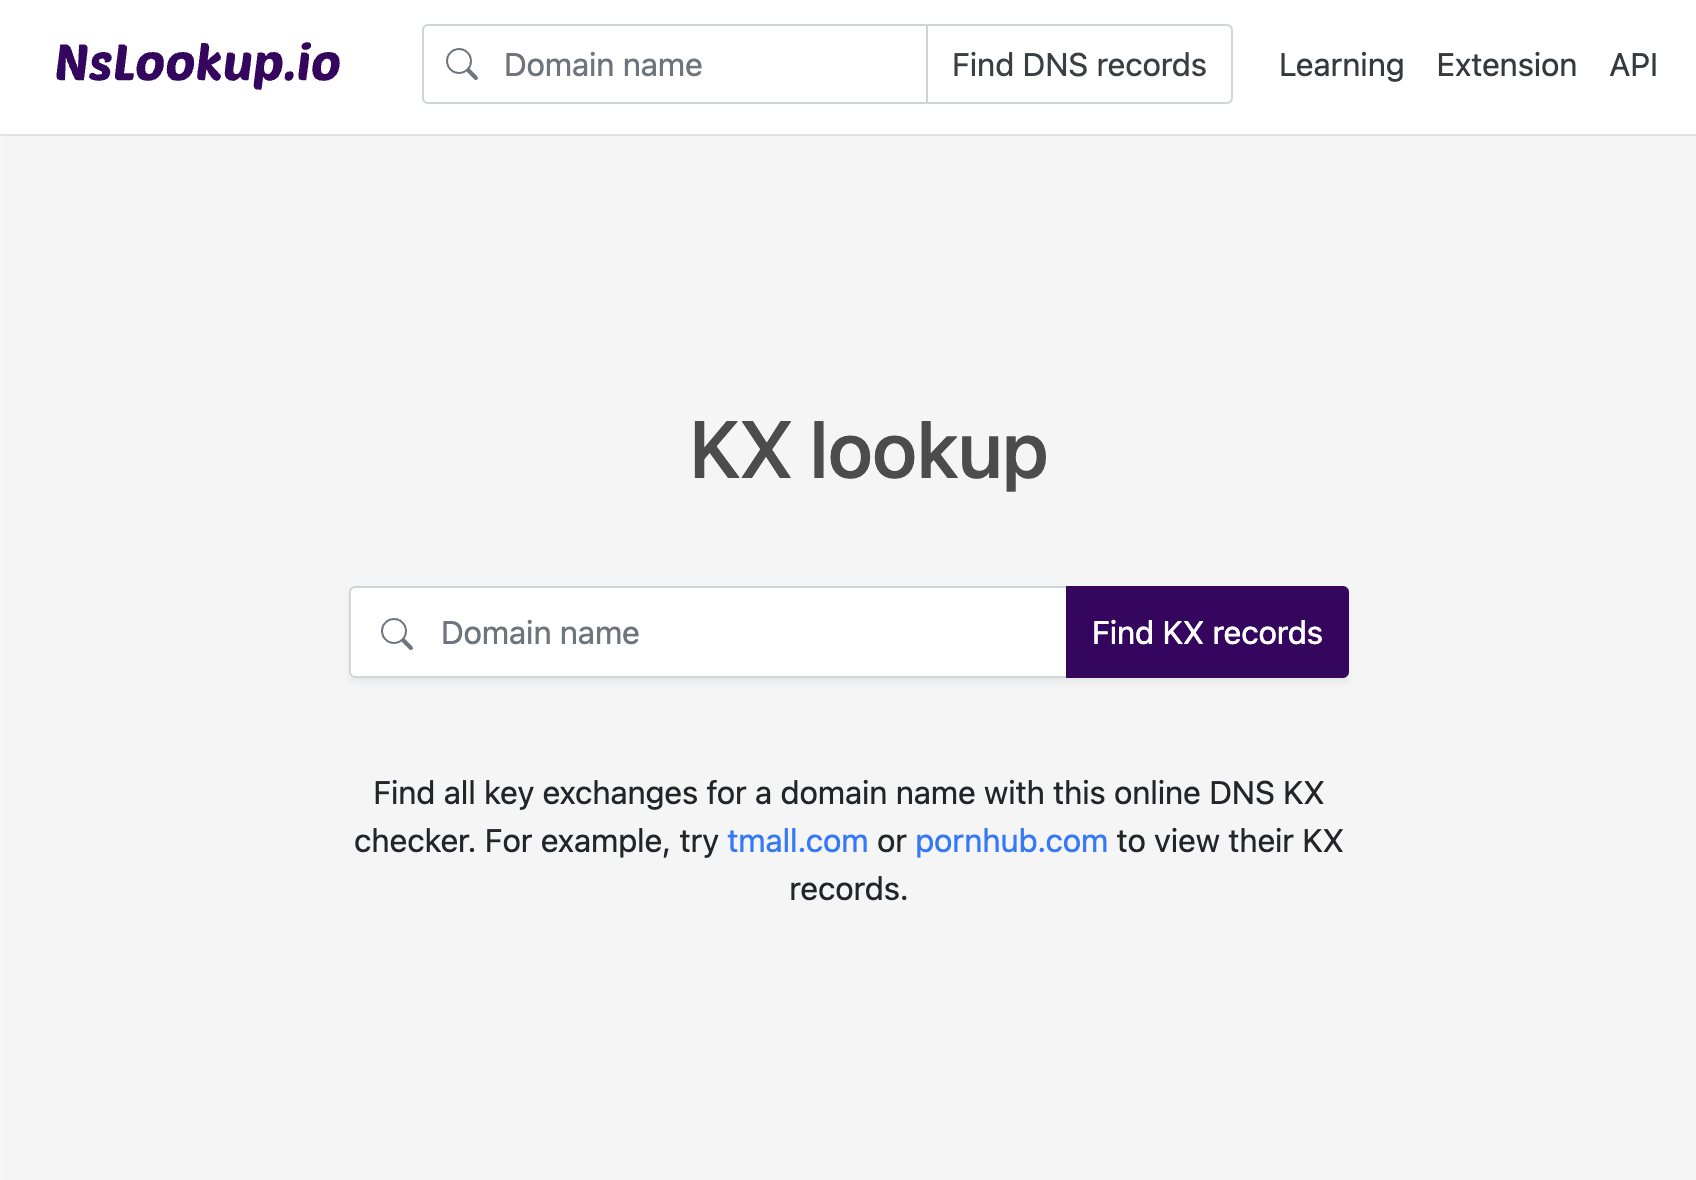 Open the KX lookup tool